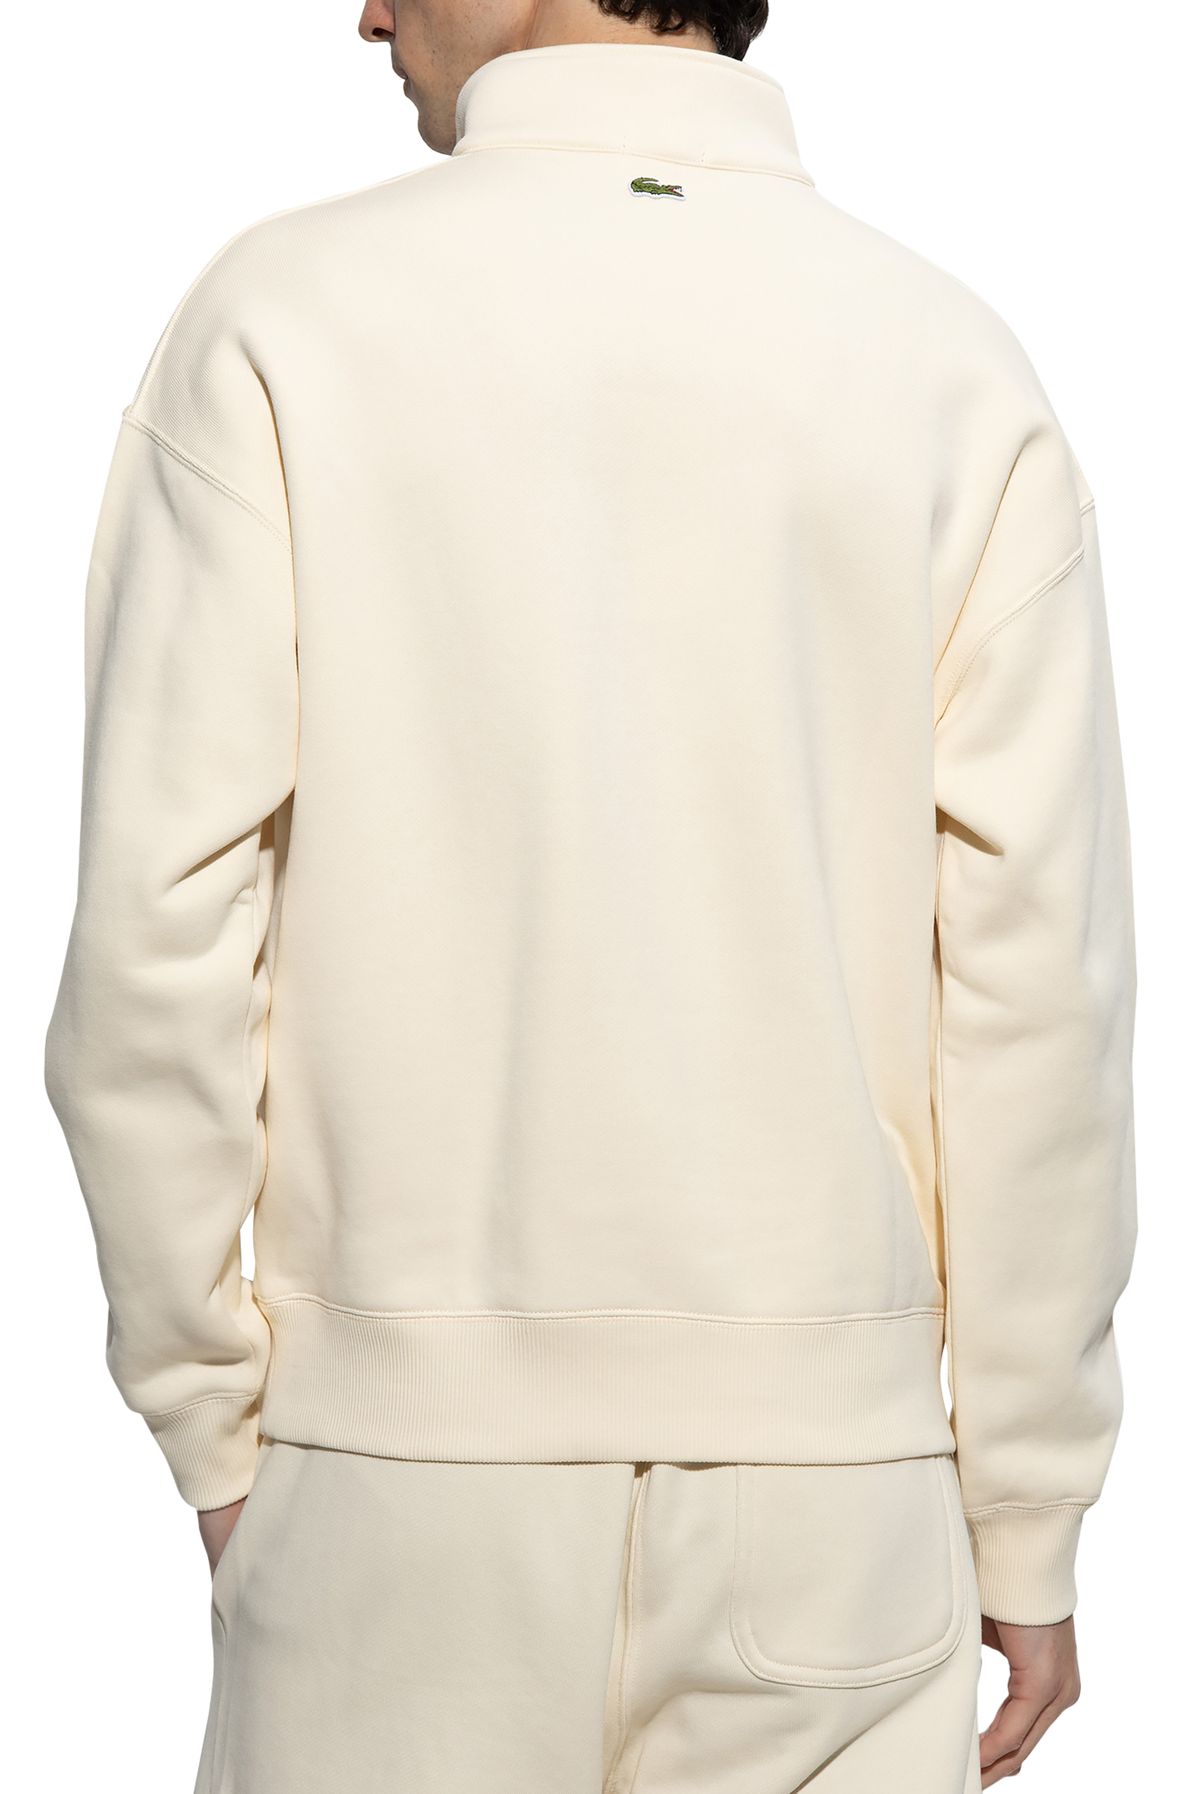 Lacoste Sweatshirt with standing collar